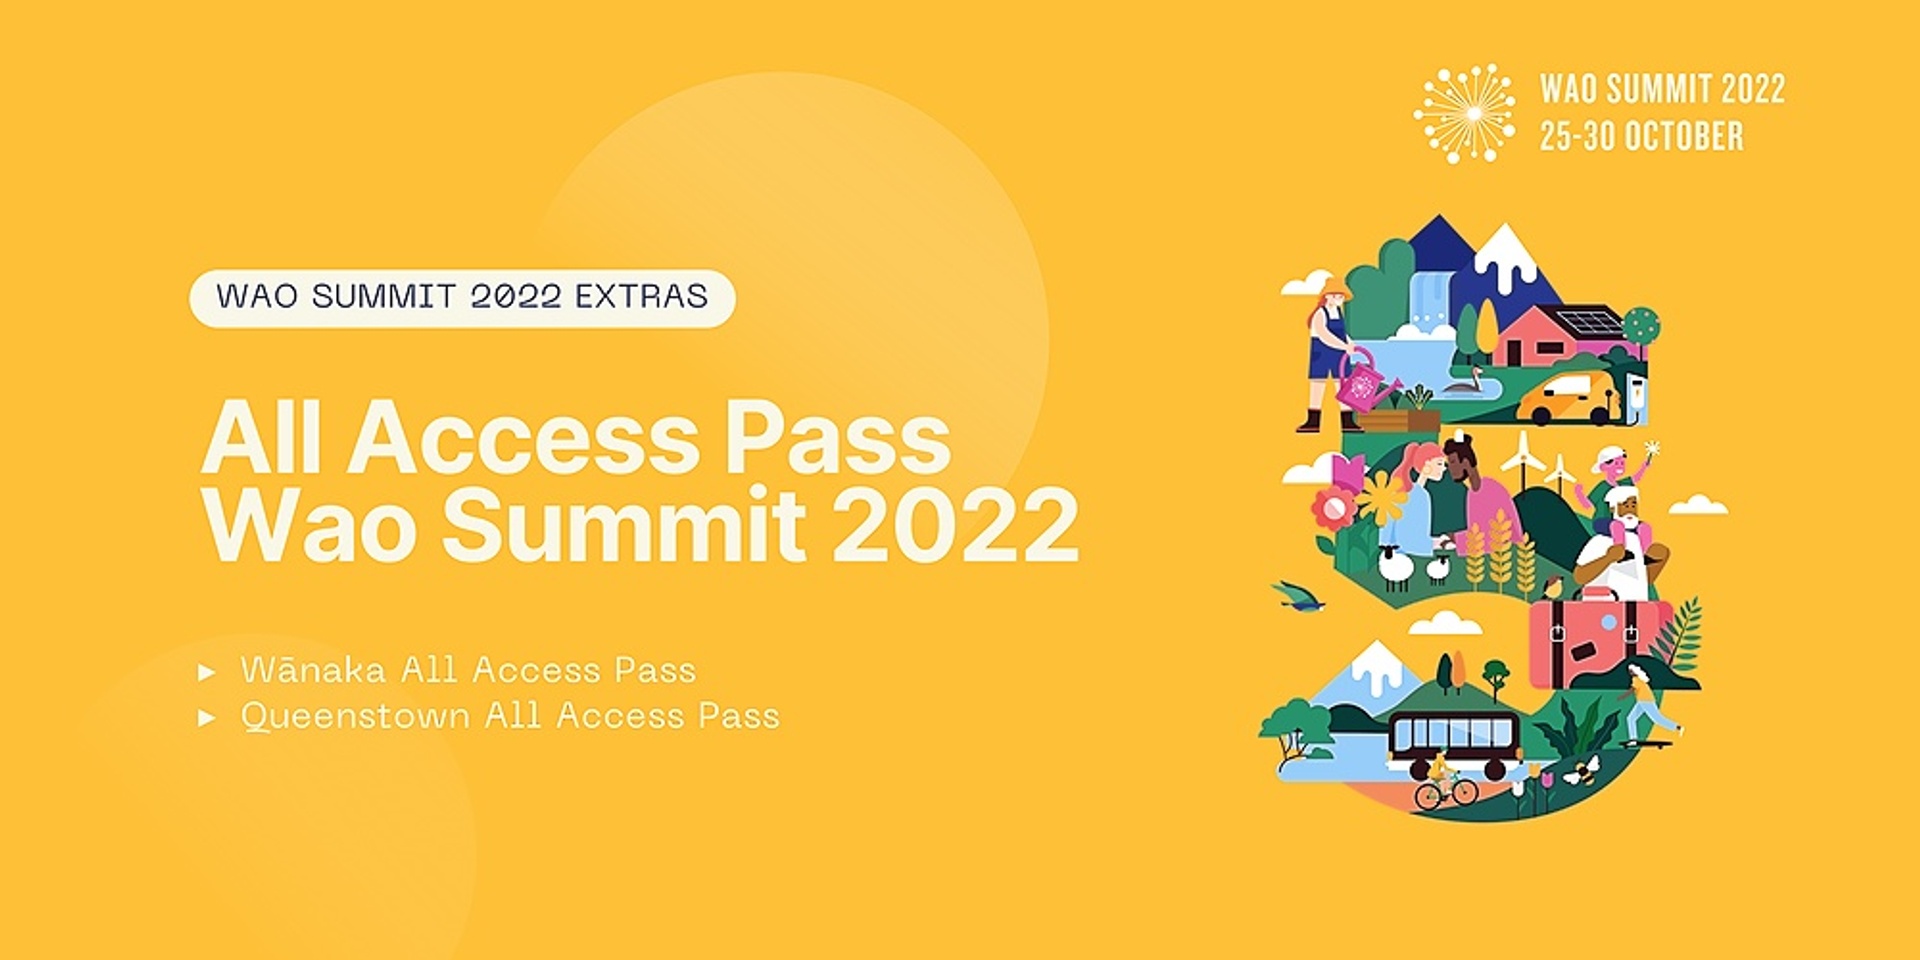 All Access Pass - Wao Summit 2022